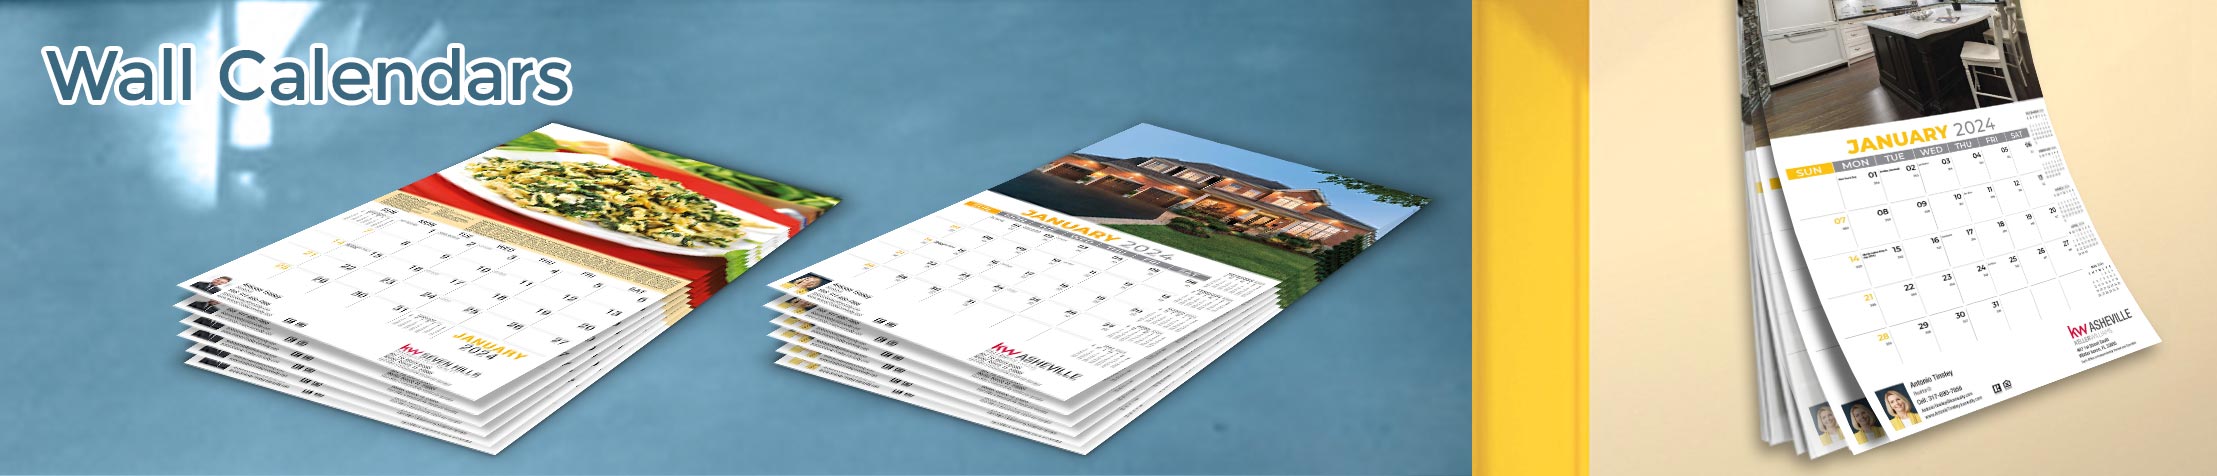 Keller Williams Real Estate Wall Calendars - KW approved vendor 2019 wall calendars | BestPrintBuy.com